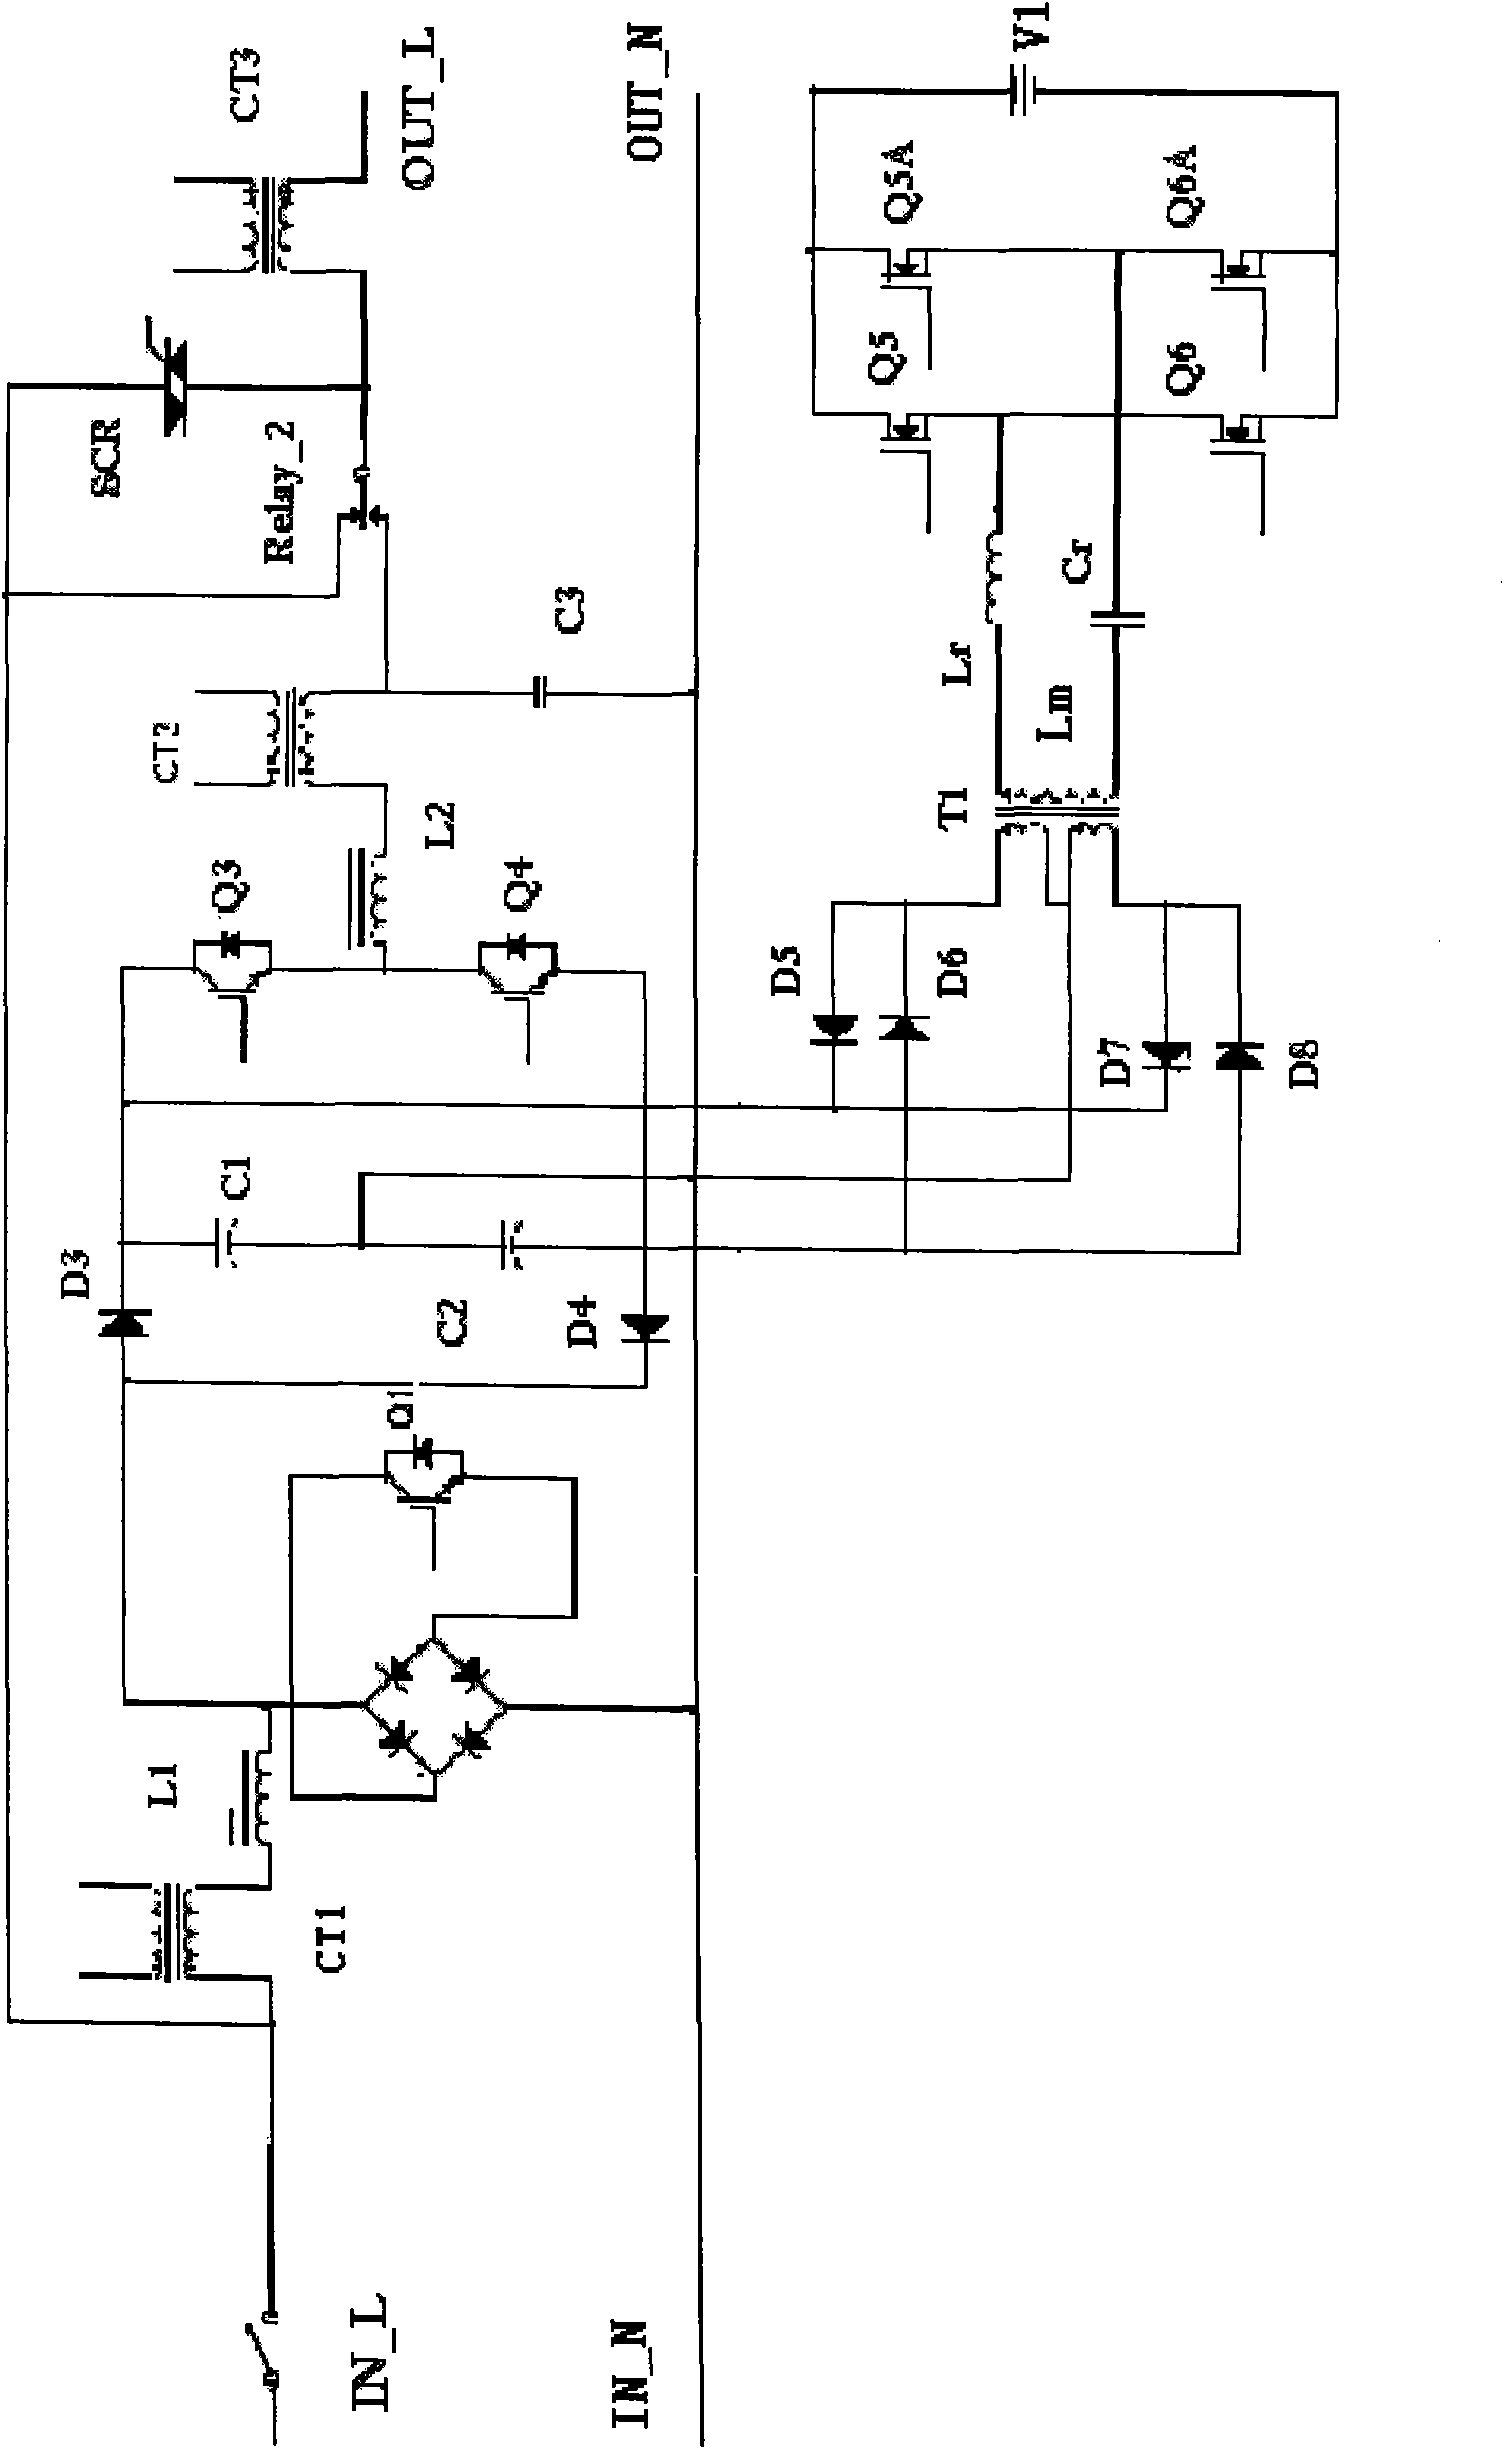 Full-bridge zero-voltage boost switching resonant converter based on LLC used for UPS